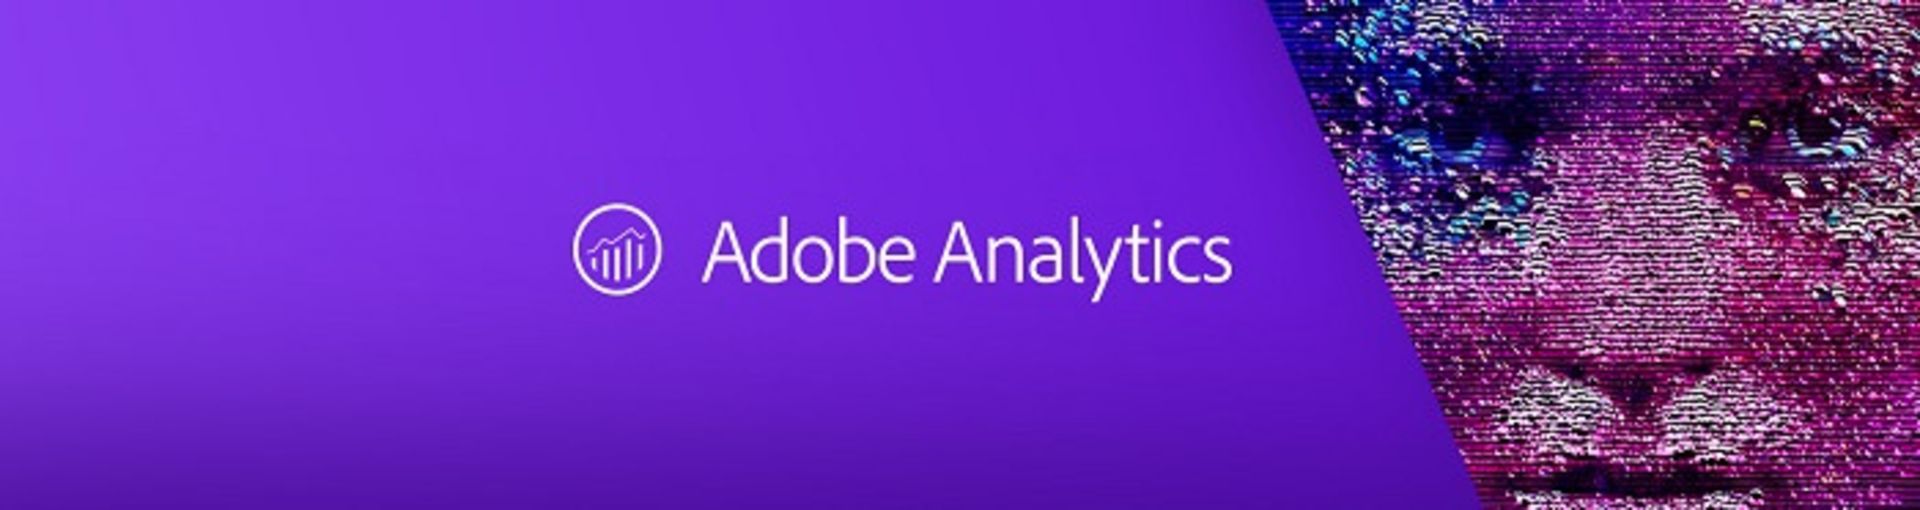 ادوبی آنالیتیکس / Adobe Analytics